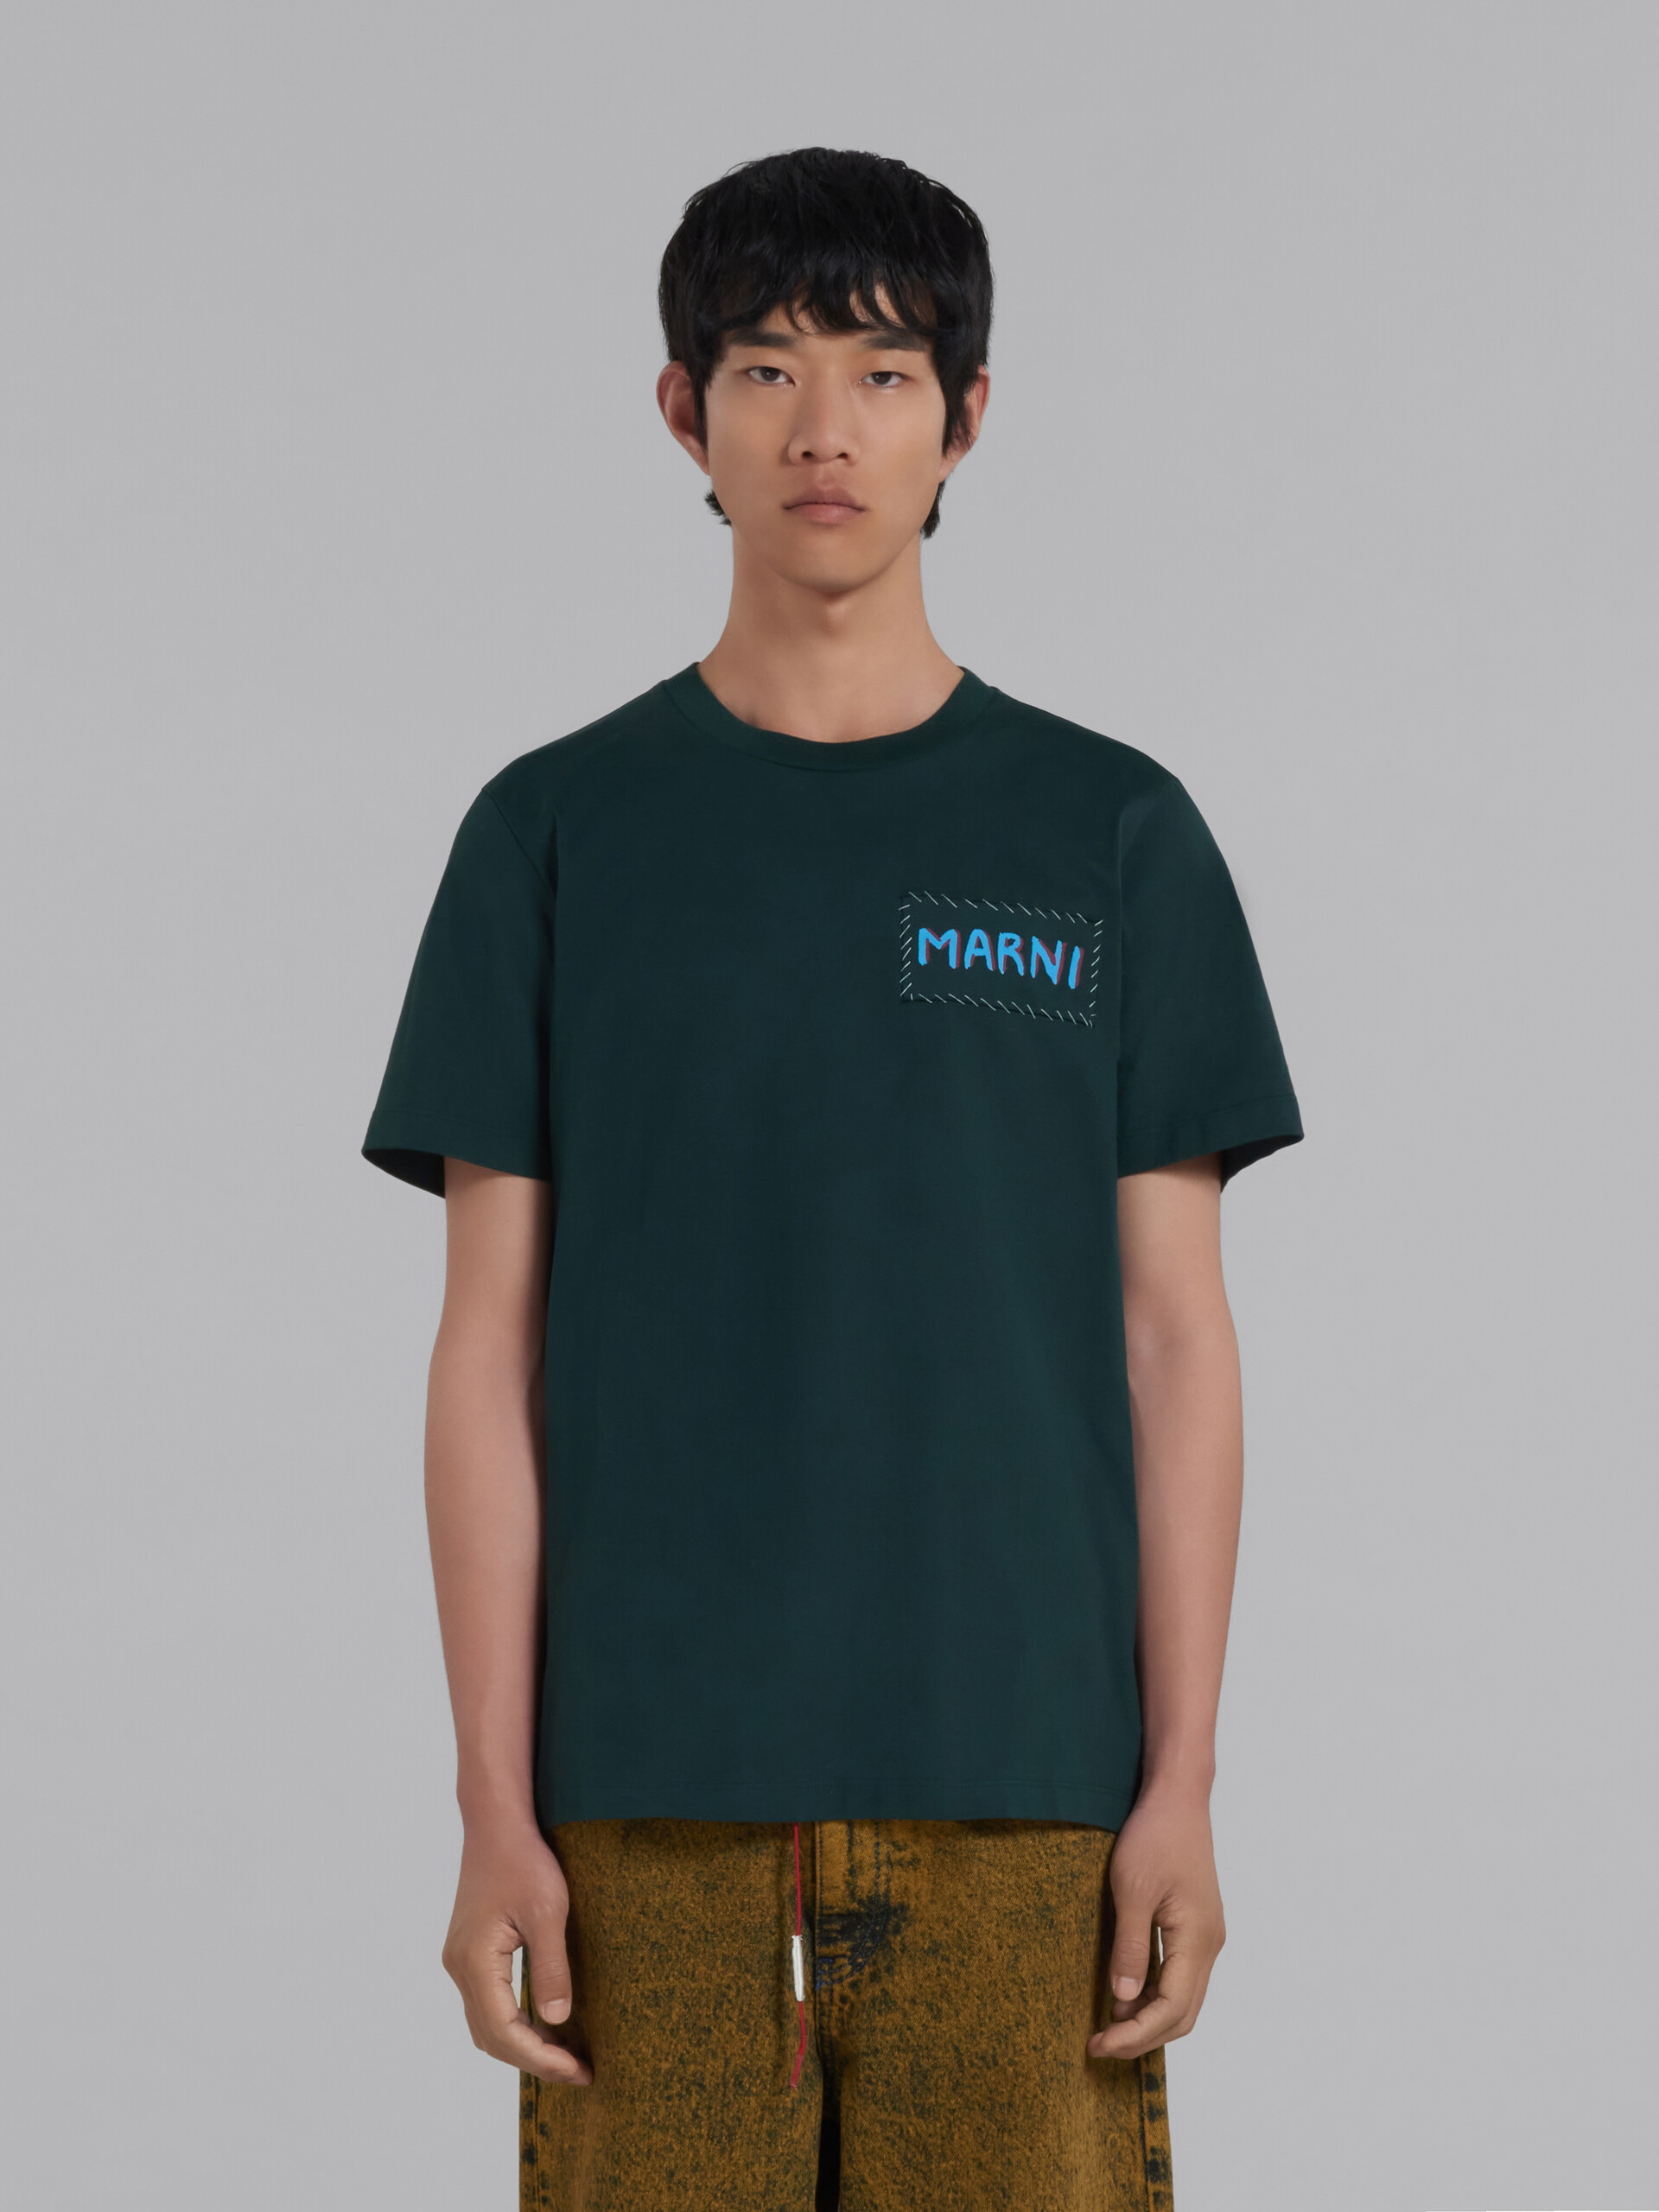 Green organic cotton T-shirt with Marni patch - T-shirts - Image 2